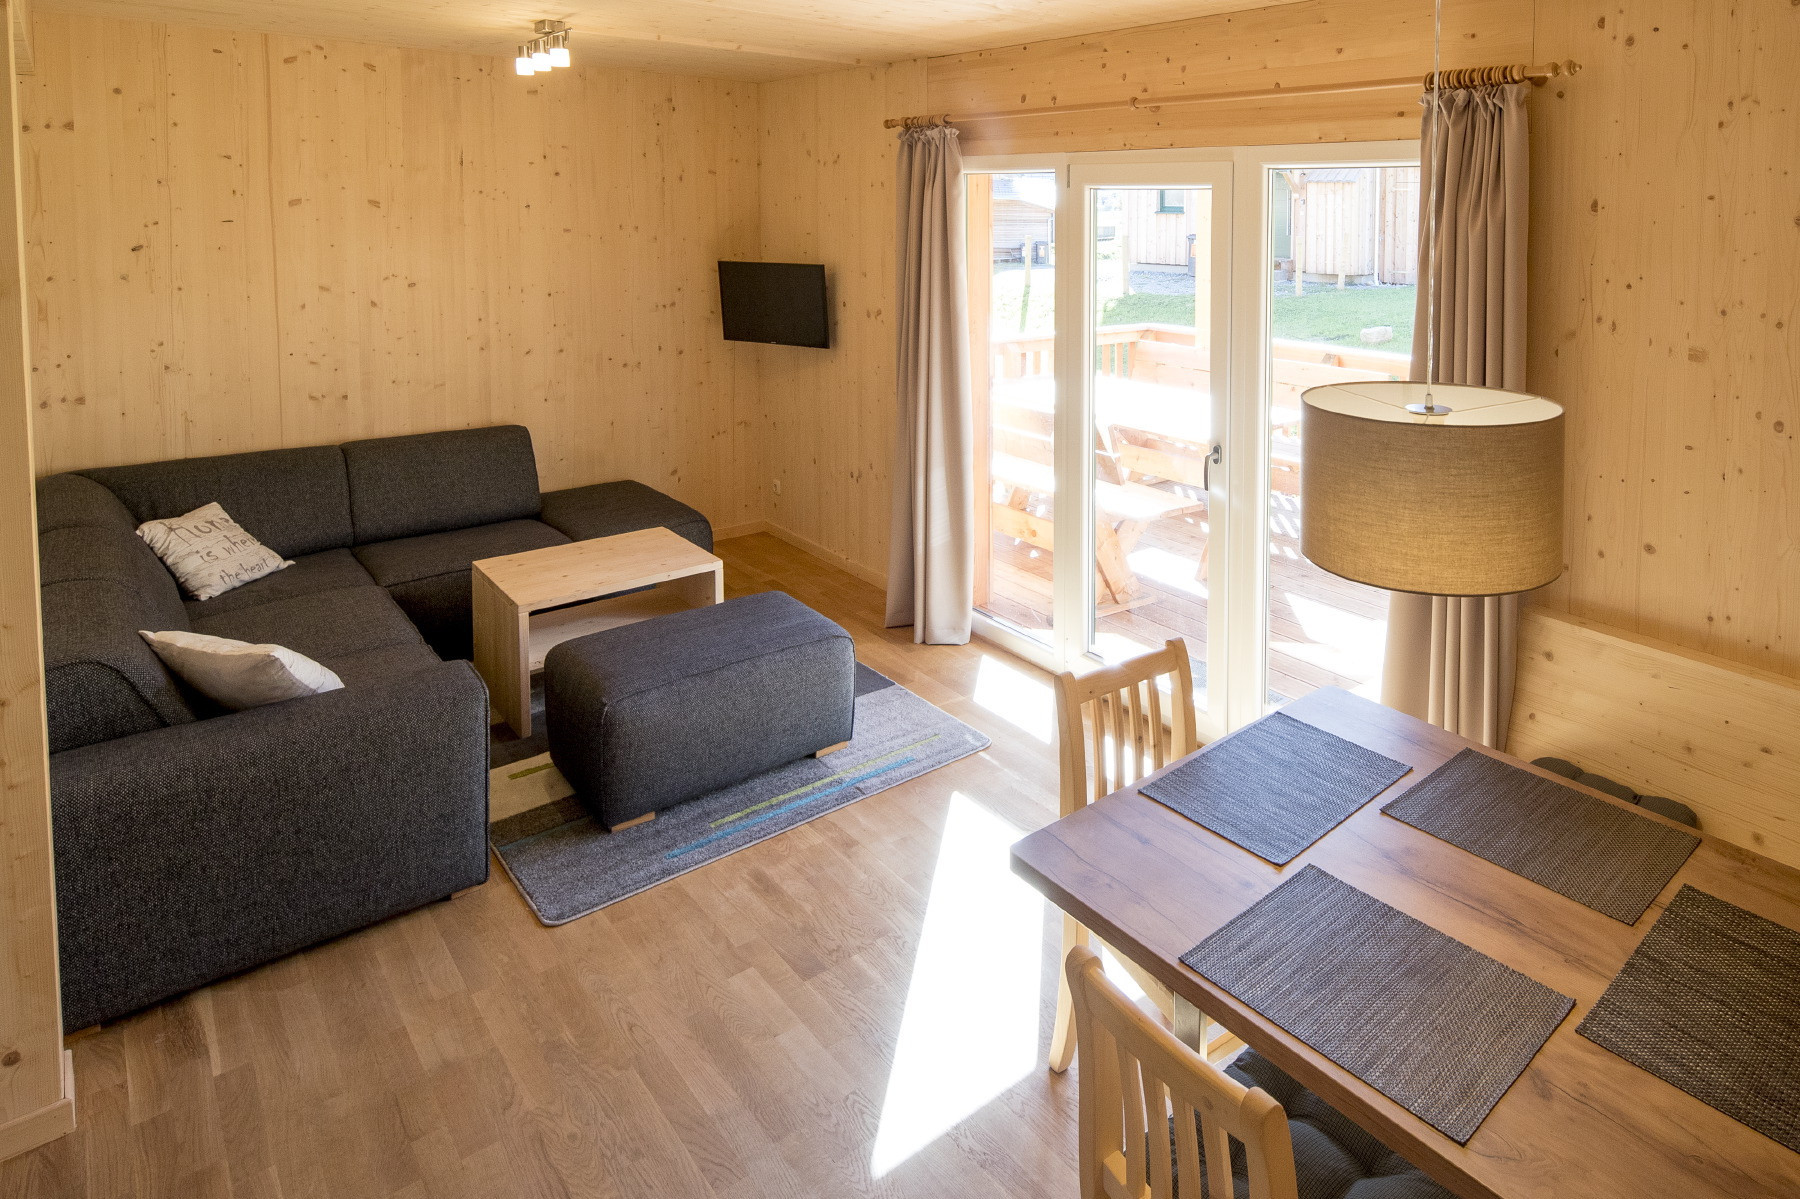  in St. Georgen am Kreischberg - Chalet # 34b with 2 bedrooms & IR sauna